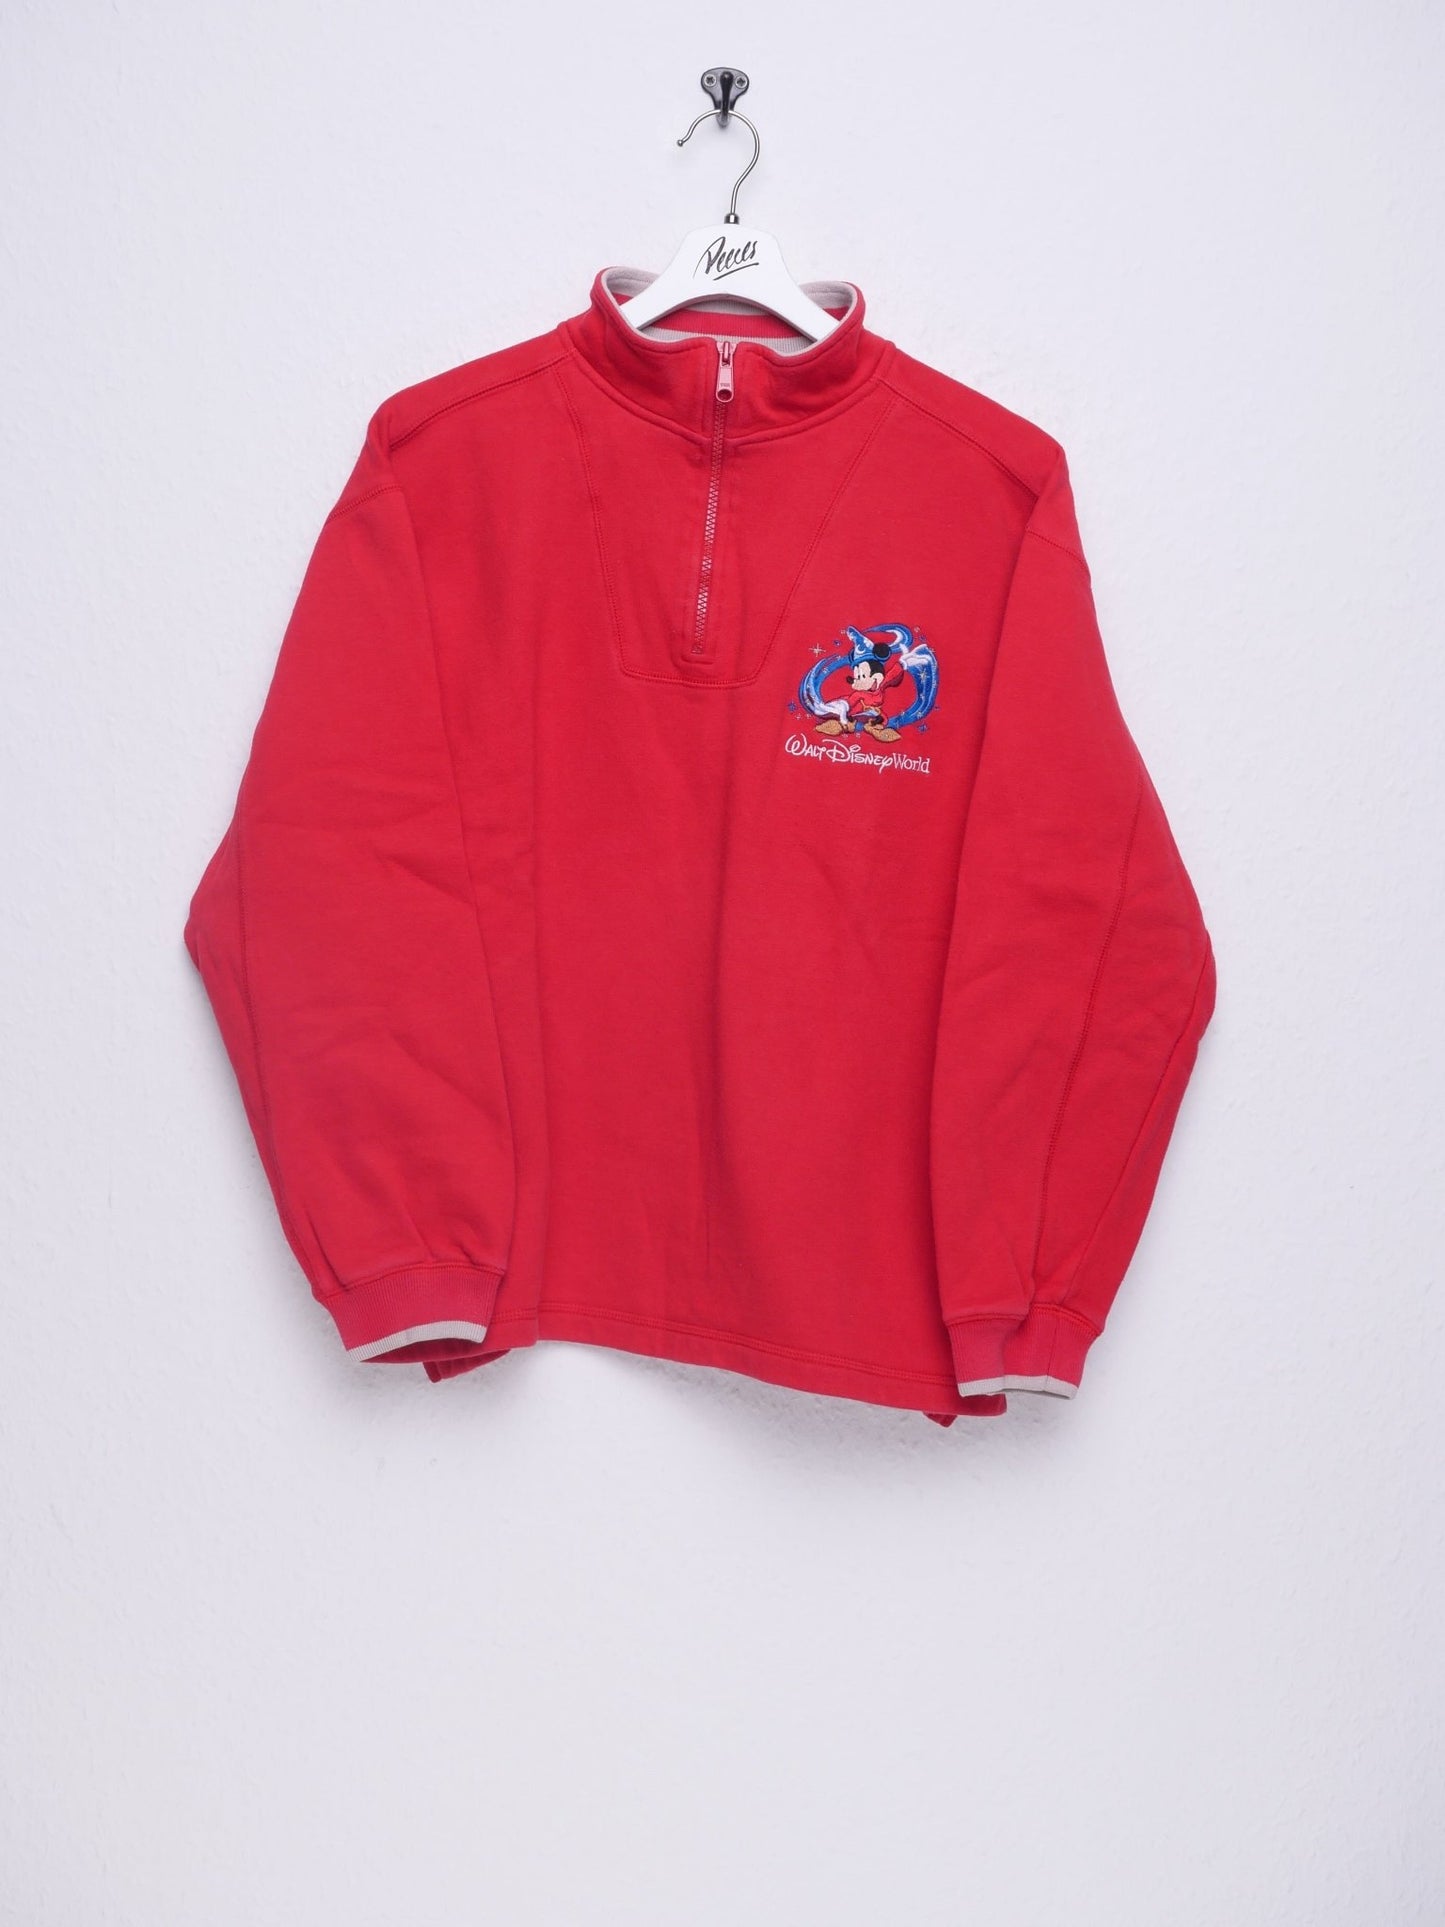 Disney Walt Disney World embroidered Mickey red Half Zip Sweater - Peeces